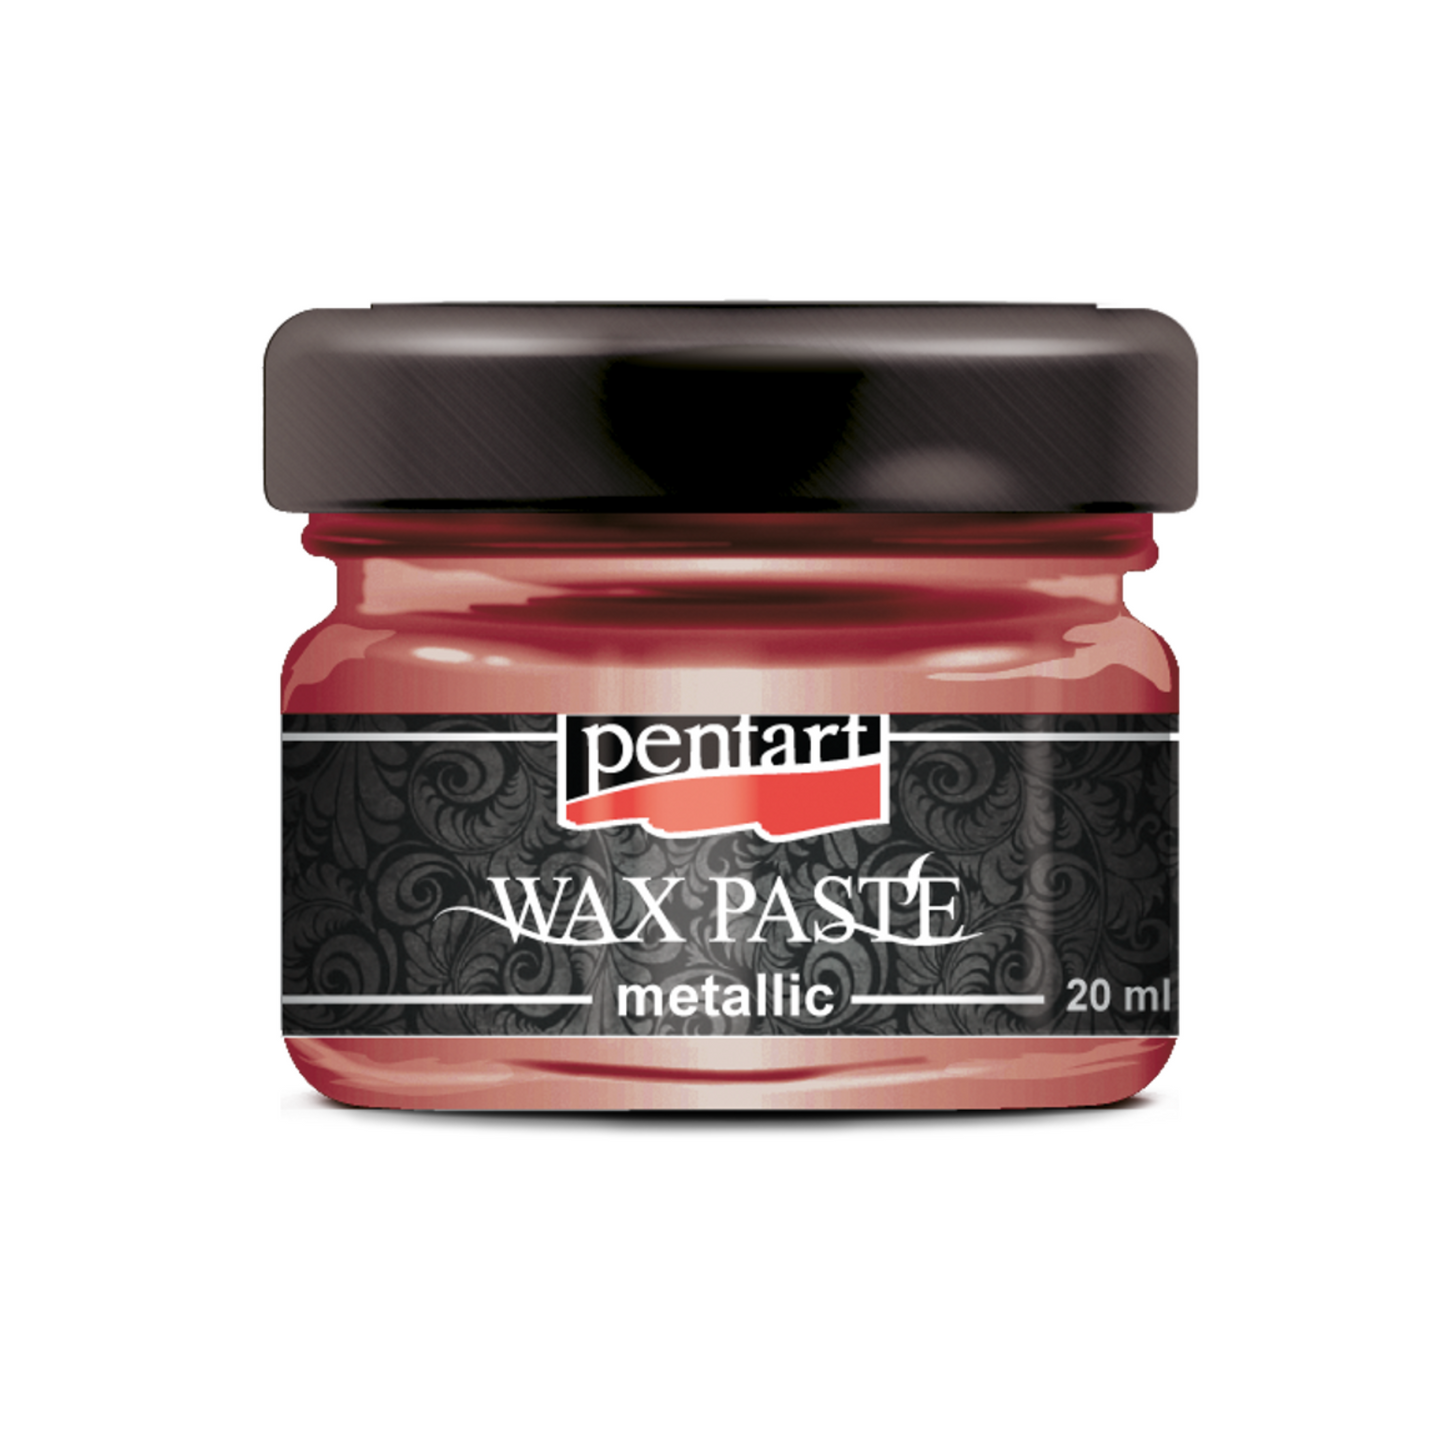 Wax Paste by Pentart - Colored, Metallic & Chameleon